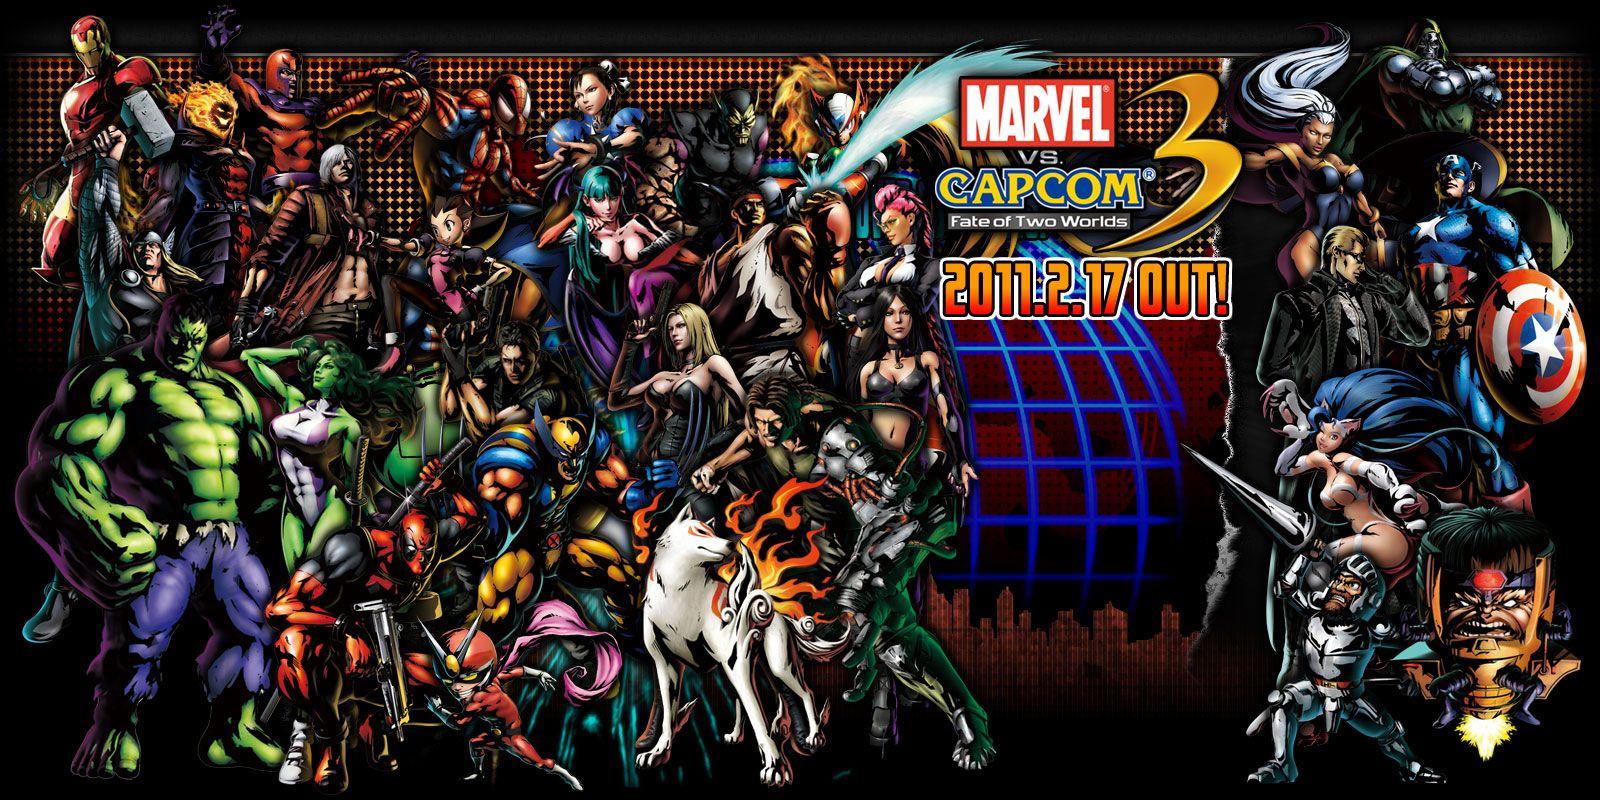 Ultimate Marvel Vs. Capcom 3 HD Wallpaper and Background Image